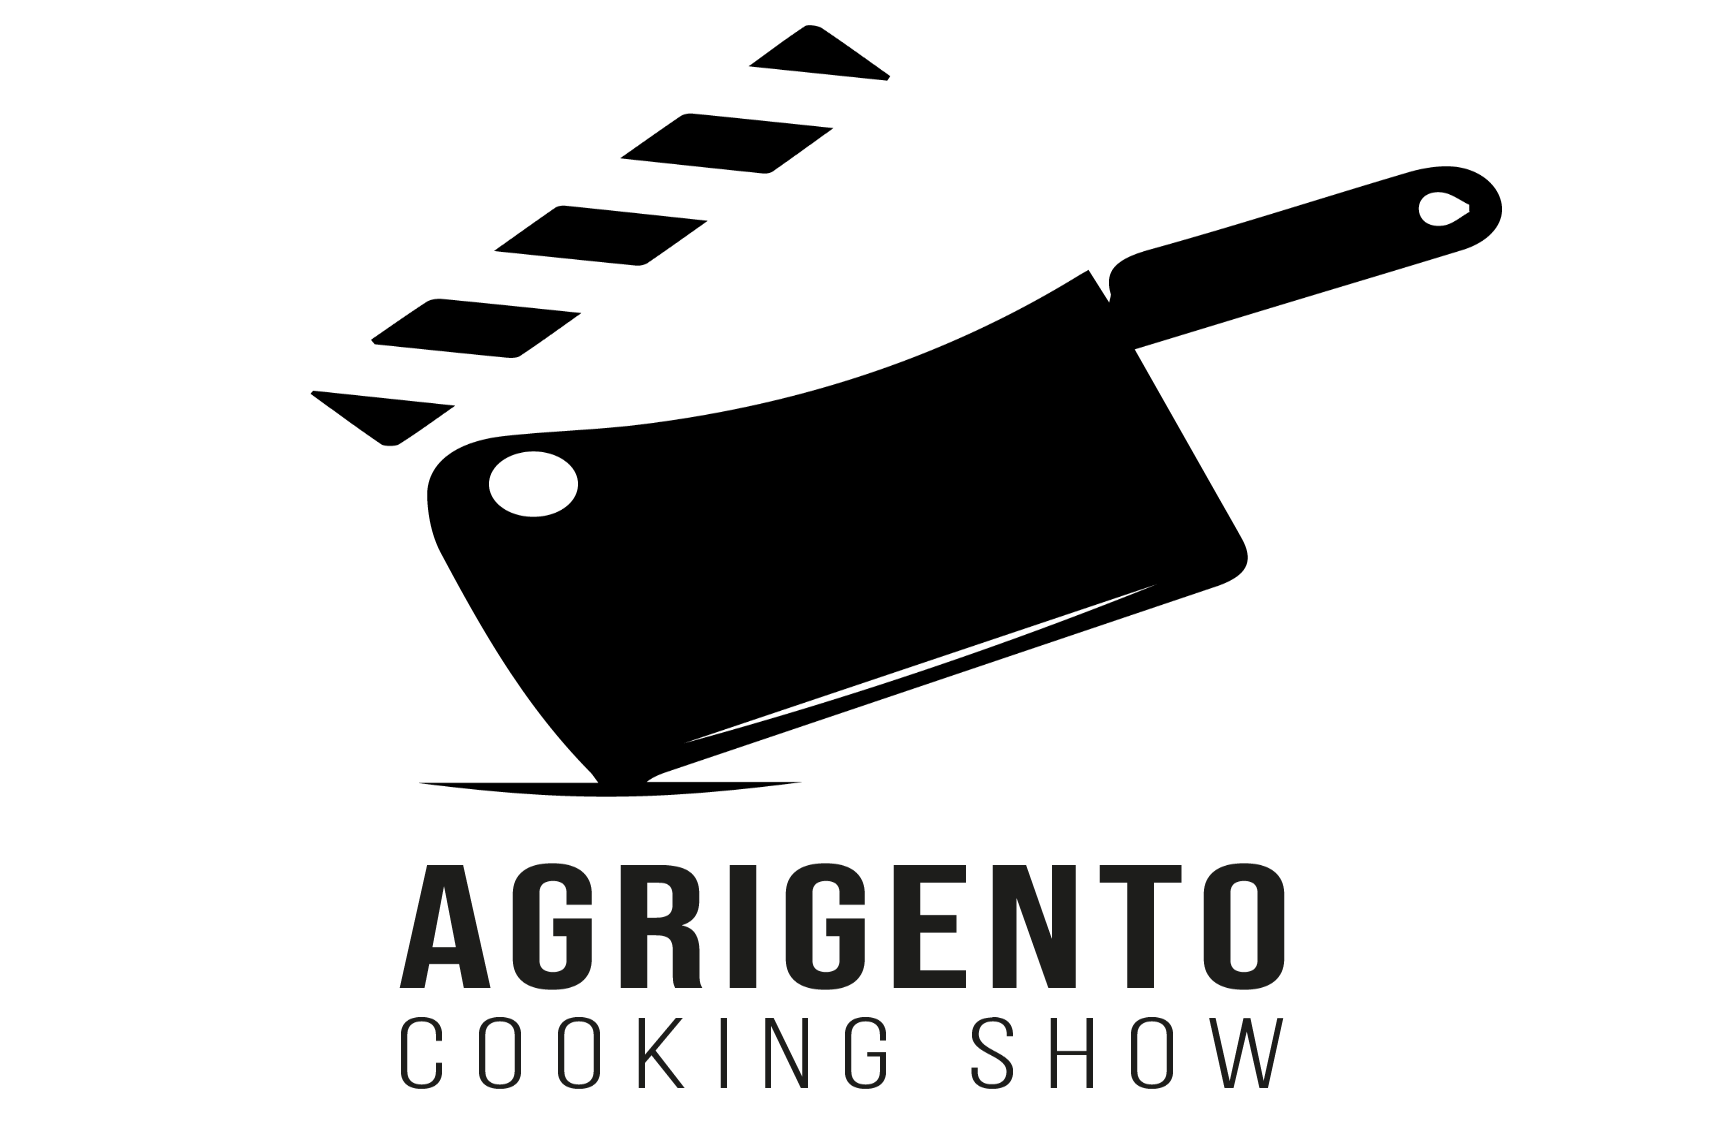 Agrigento Cooking Show: i finalisti